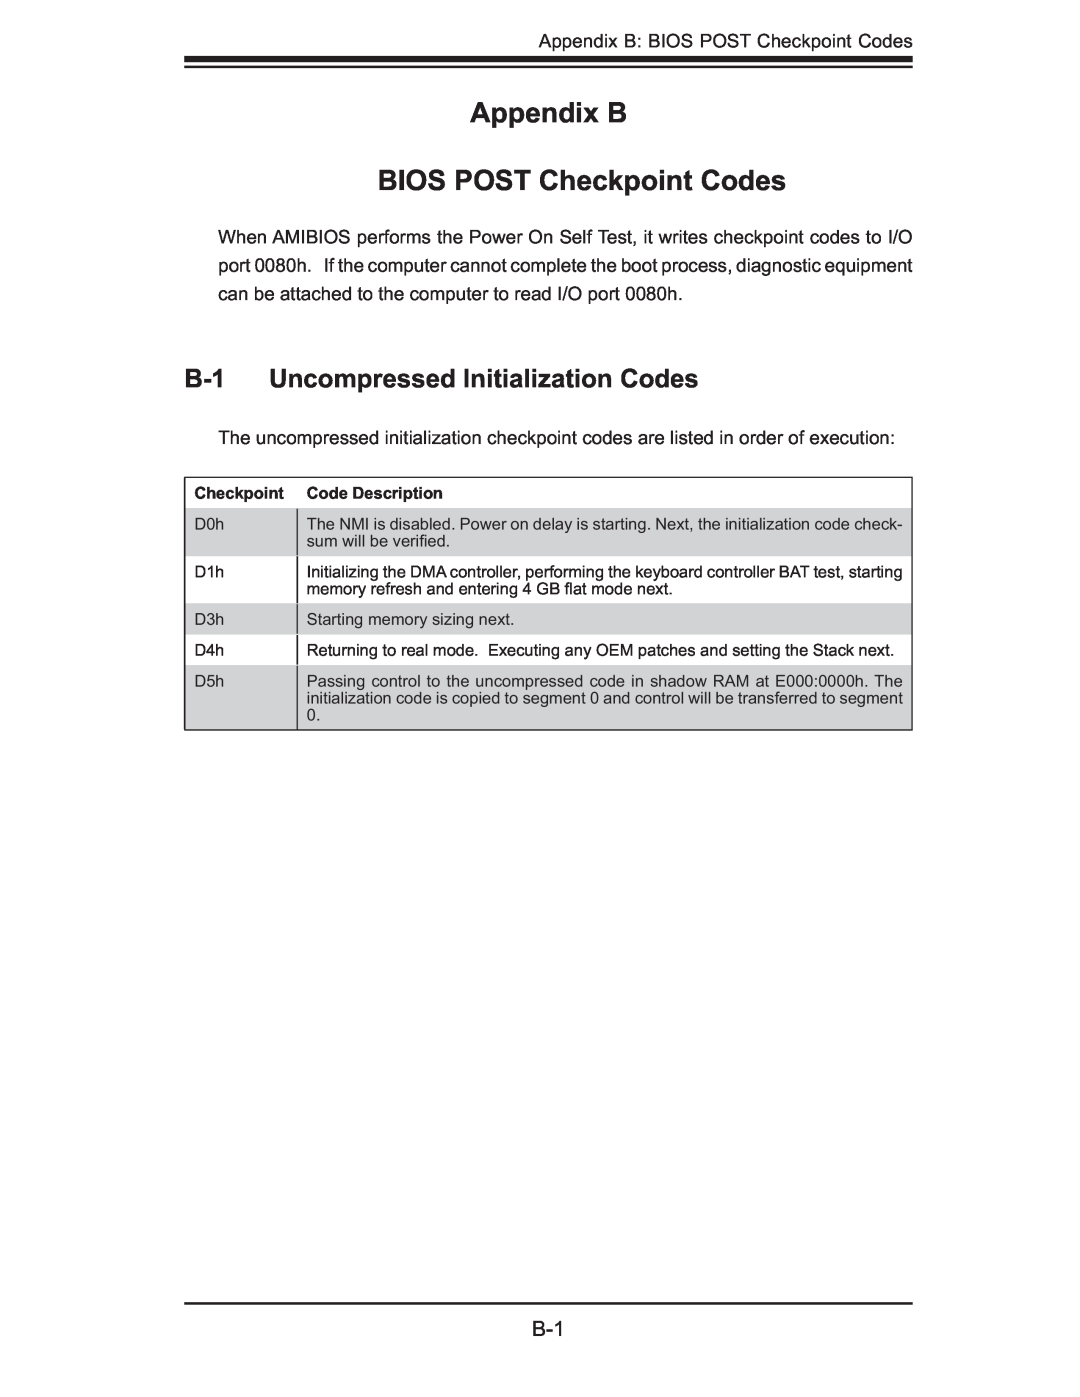 SUPER MICRO Computer 6014L-M manual Appendix B BIOS POST Checkpoint Codes, B-1 Uncompressed Initialization Codes 